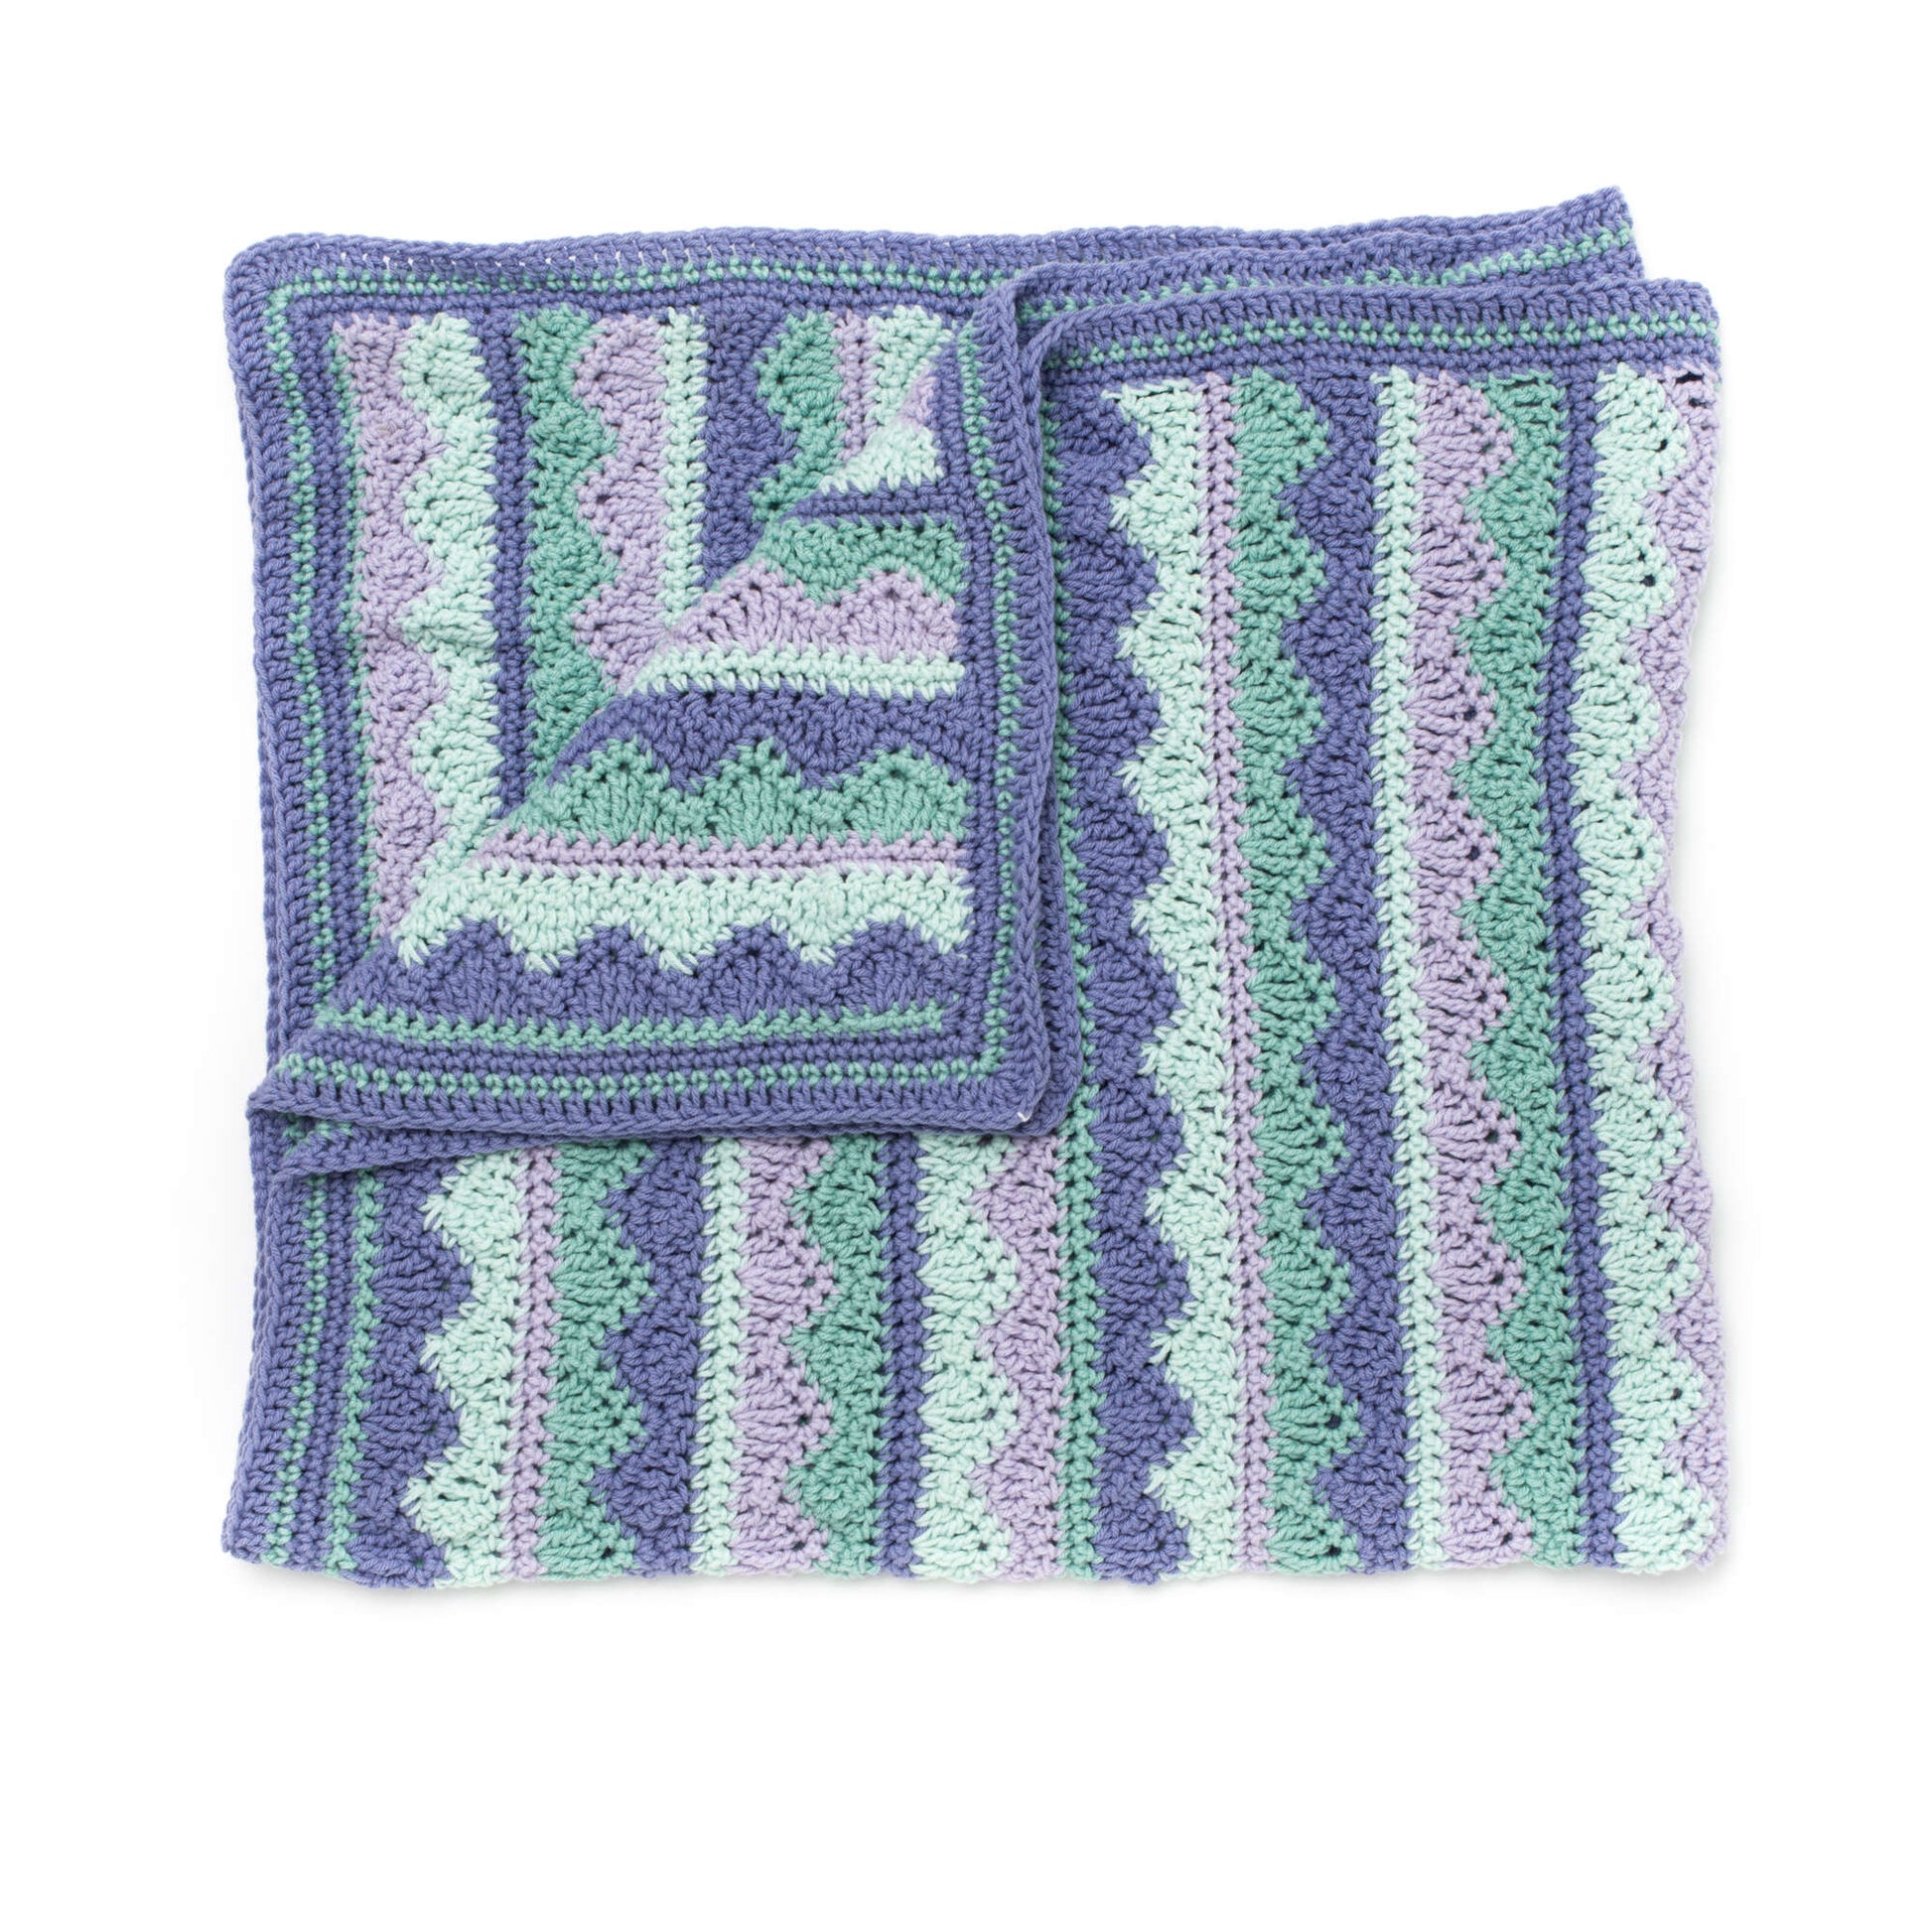 Free Caron Crochet Summer Mist Throw Pattern